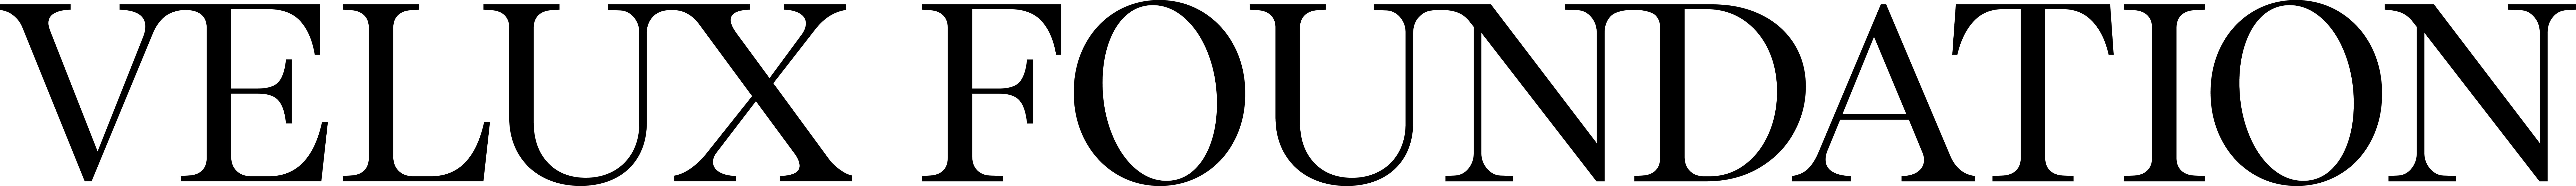 Velux foundation logo